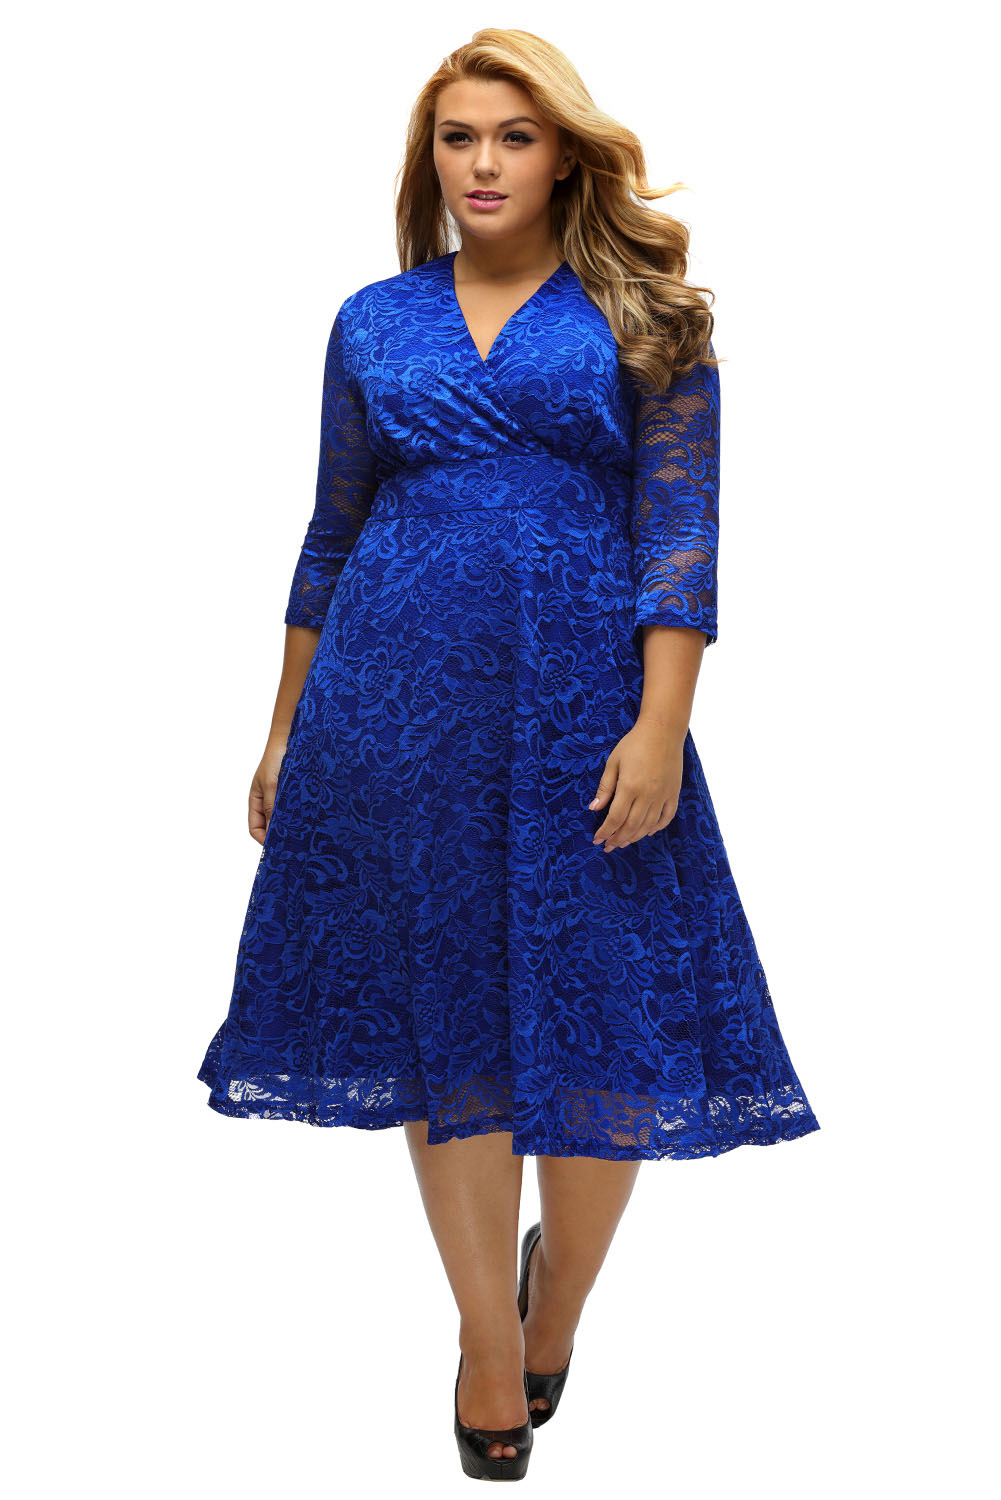 BY61442-4 Blue Plus Size Surplice Lace Formal Skater Dress